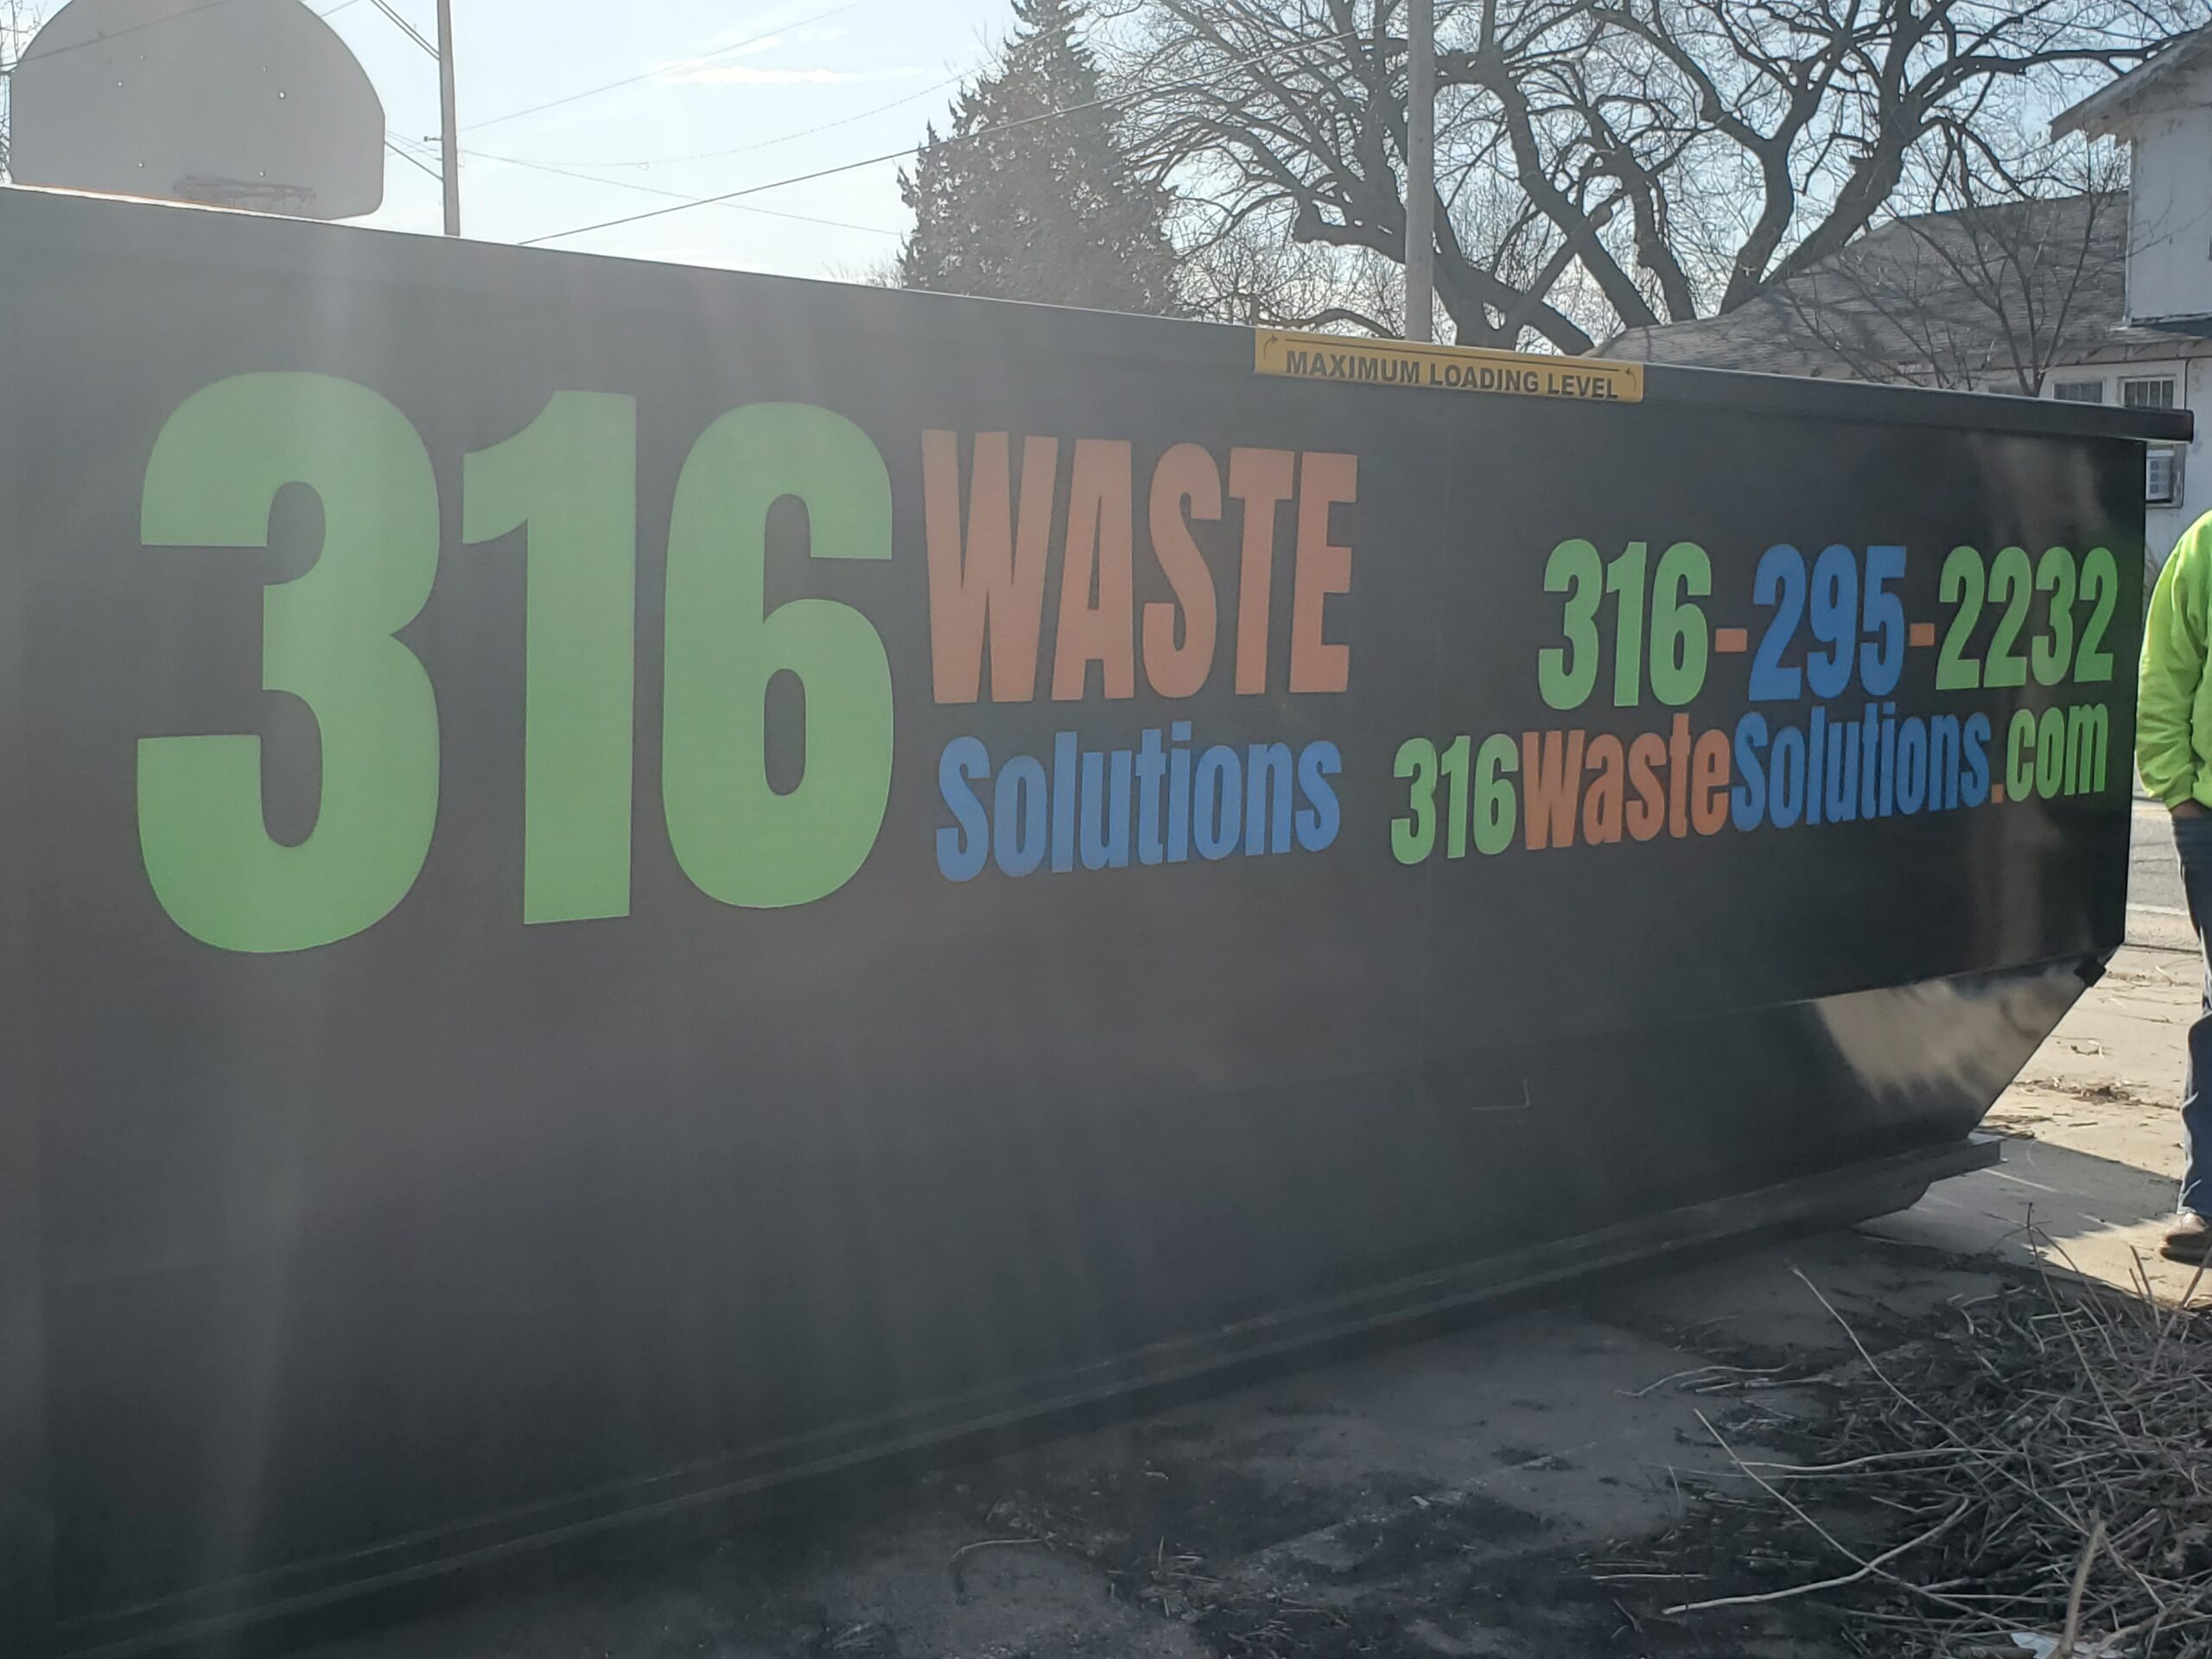 About 316 Waste Solutions of Wichita Kansas